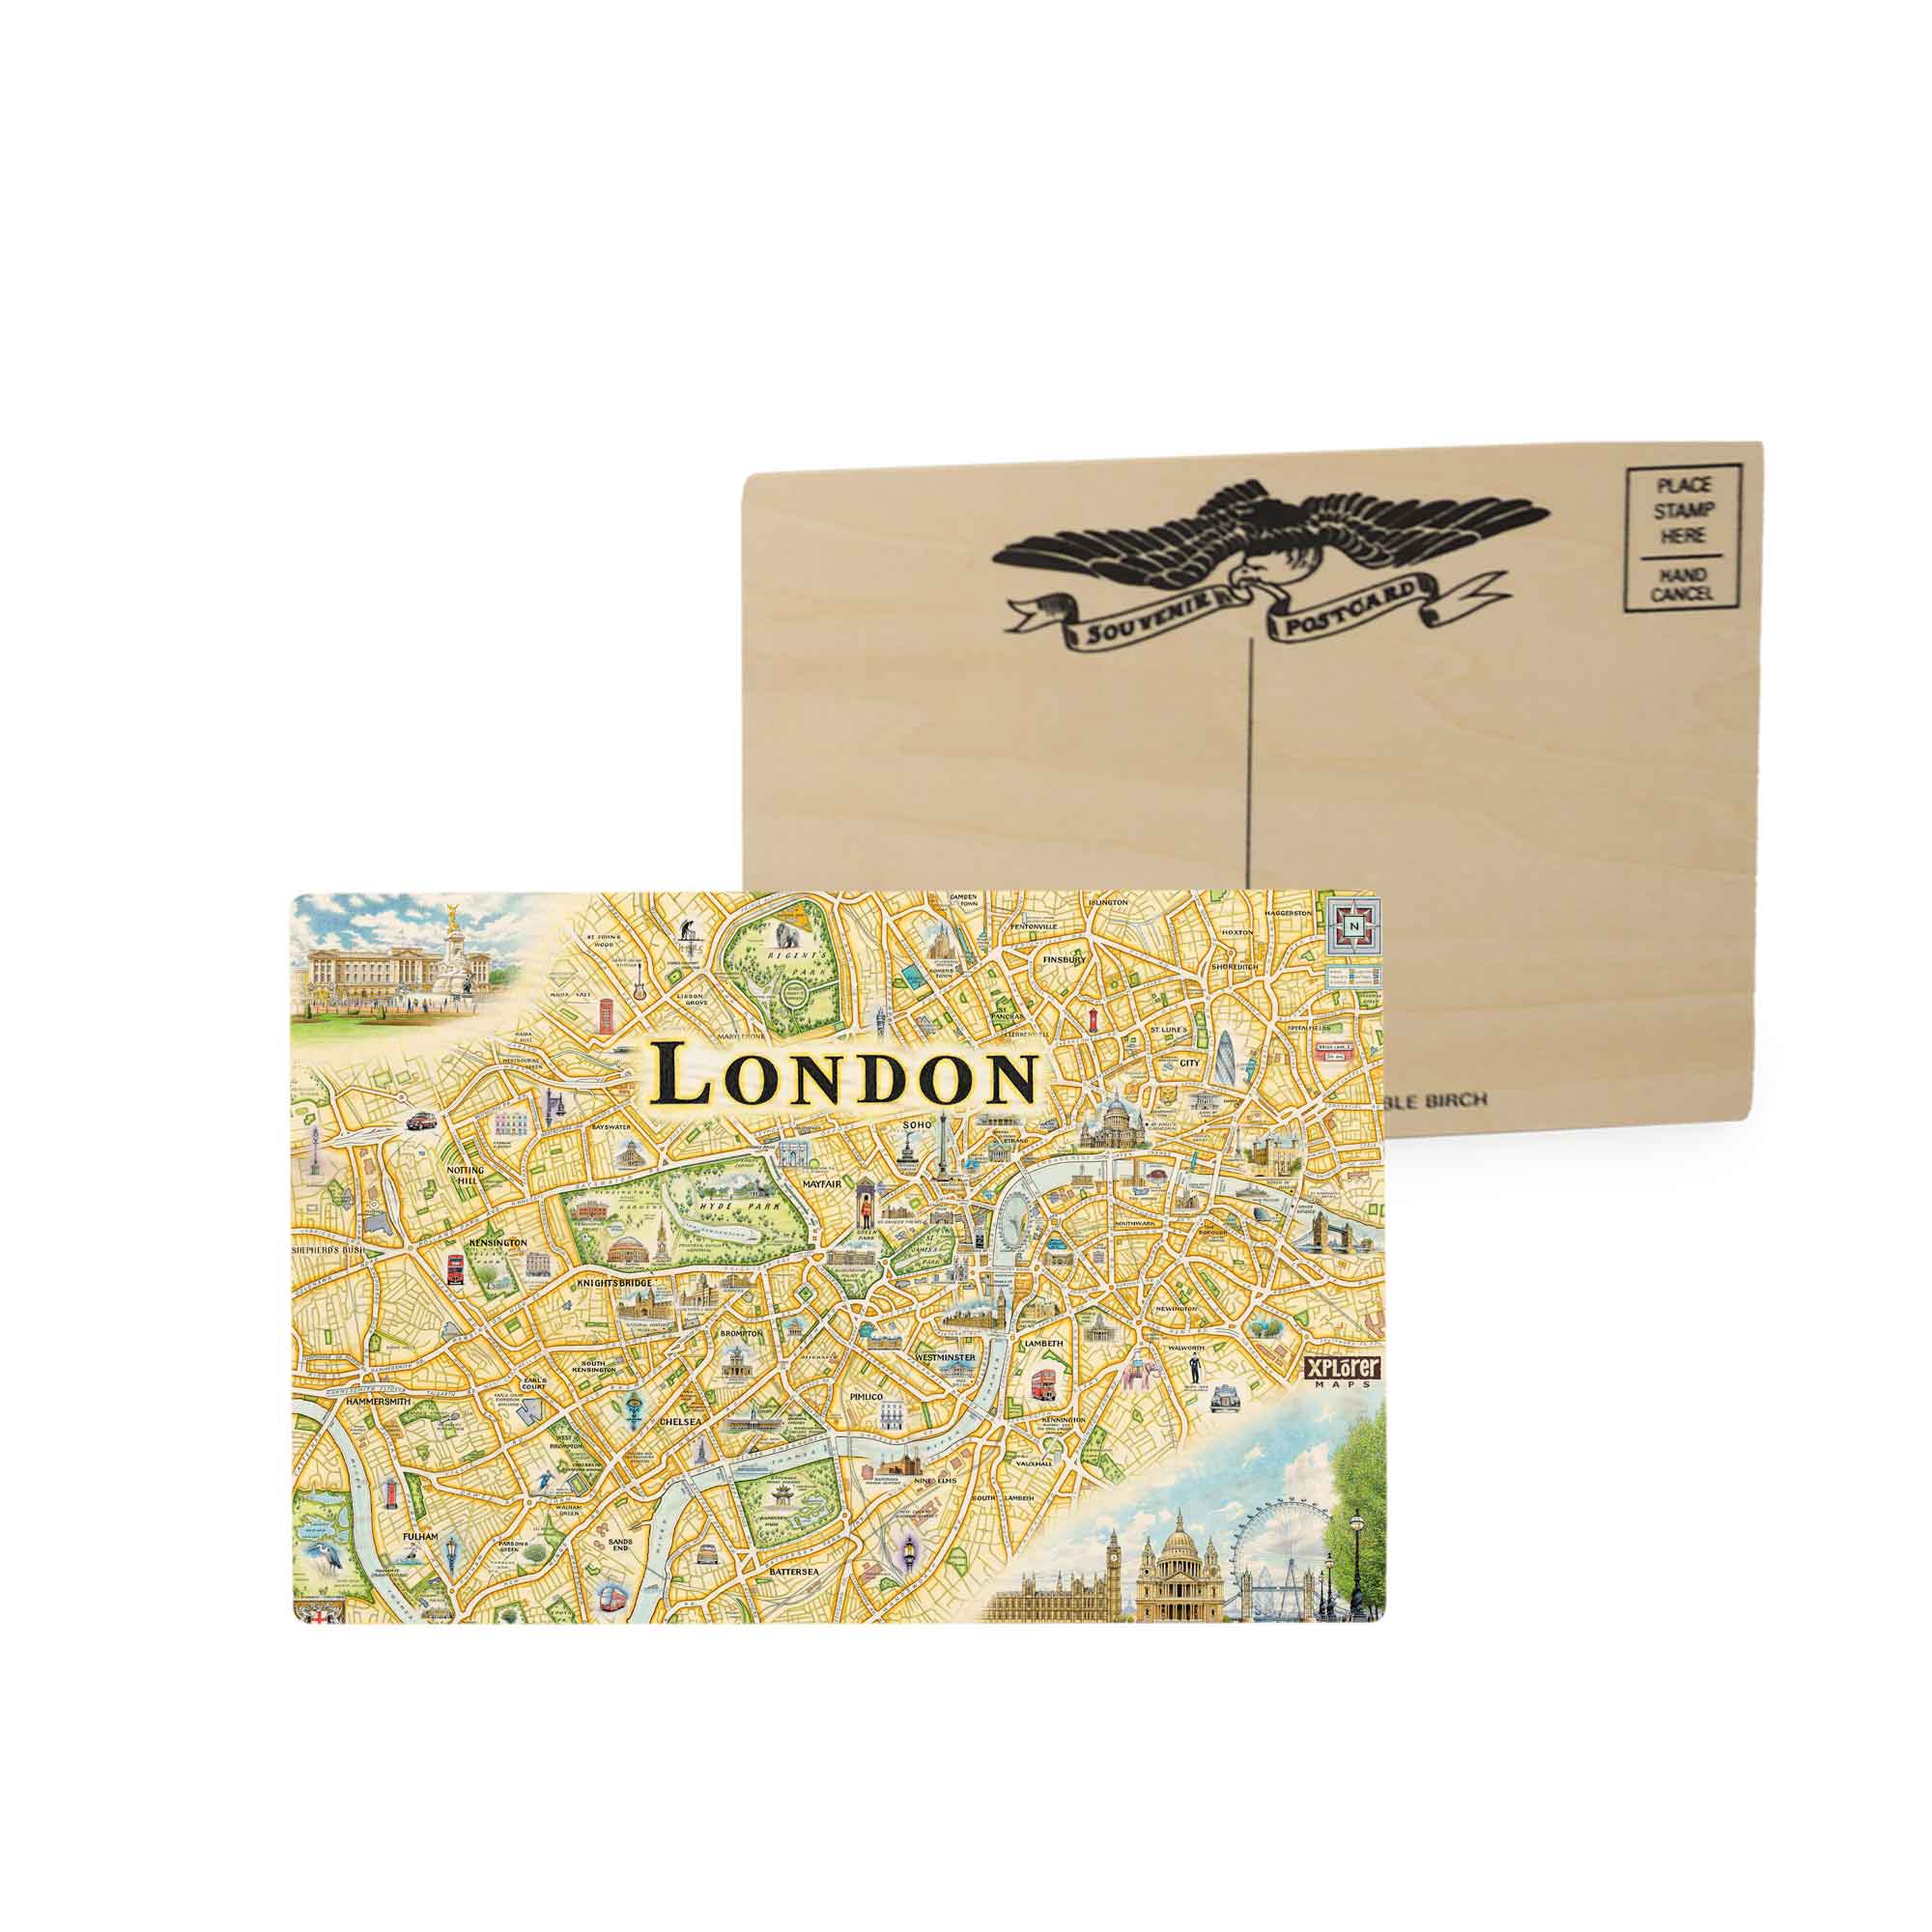 Xplorer Maps London wooden postcards. The map features Big Ben, Buckingham Palace, Tower Bridge, and The London Eye, or the Millennium Wheel, Farris Wheel.